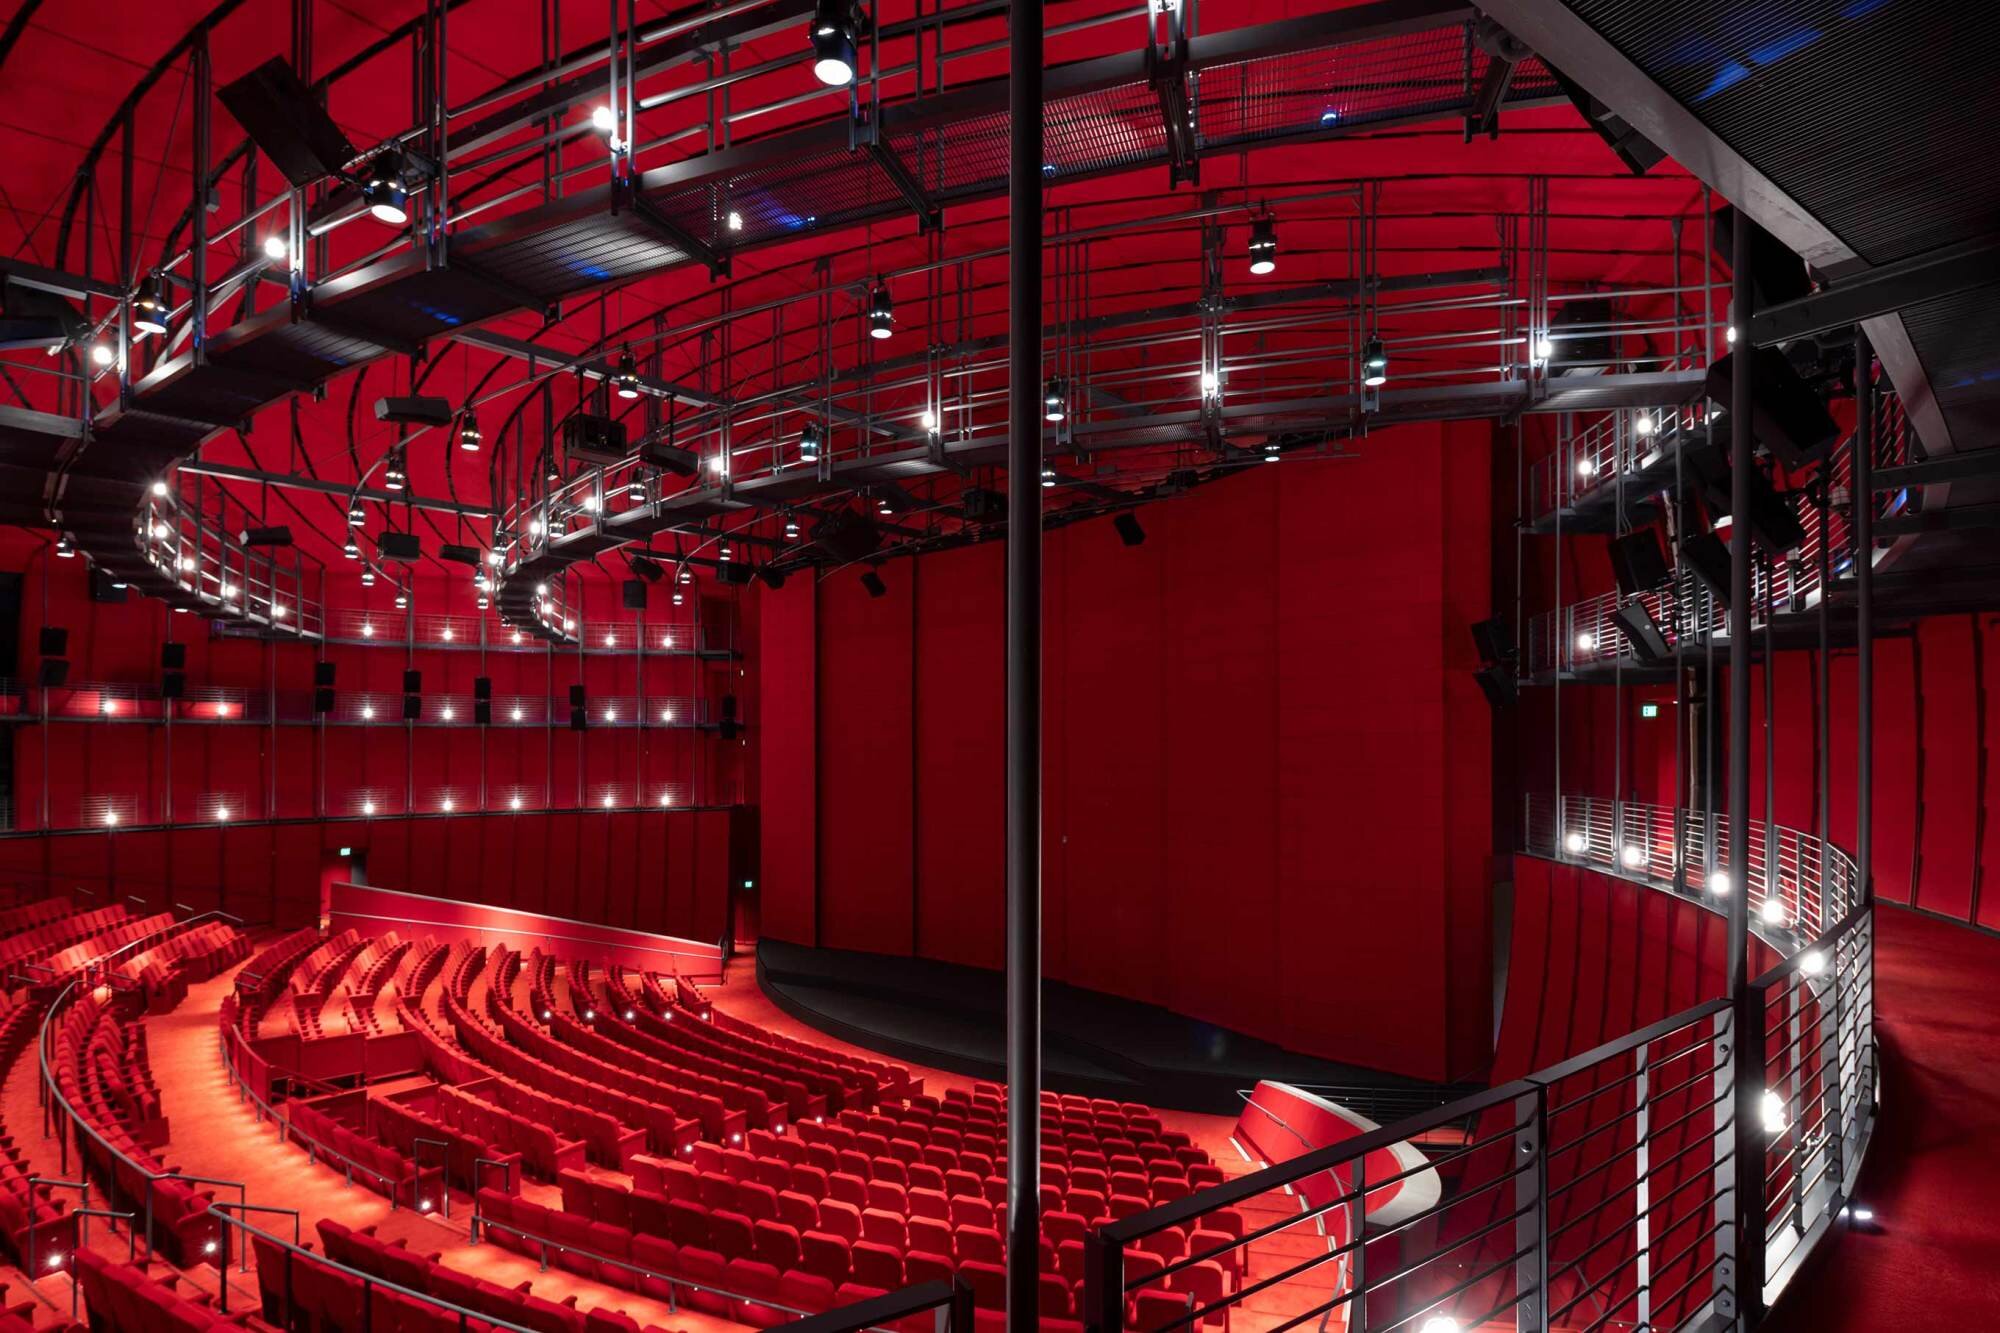   The Academy Museum’s 1,000-seat David Geffen Theater.    (Iwan Baan/Iwan Baan Studios/Academy Museum Foundation)  